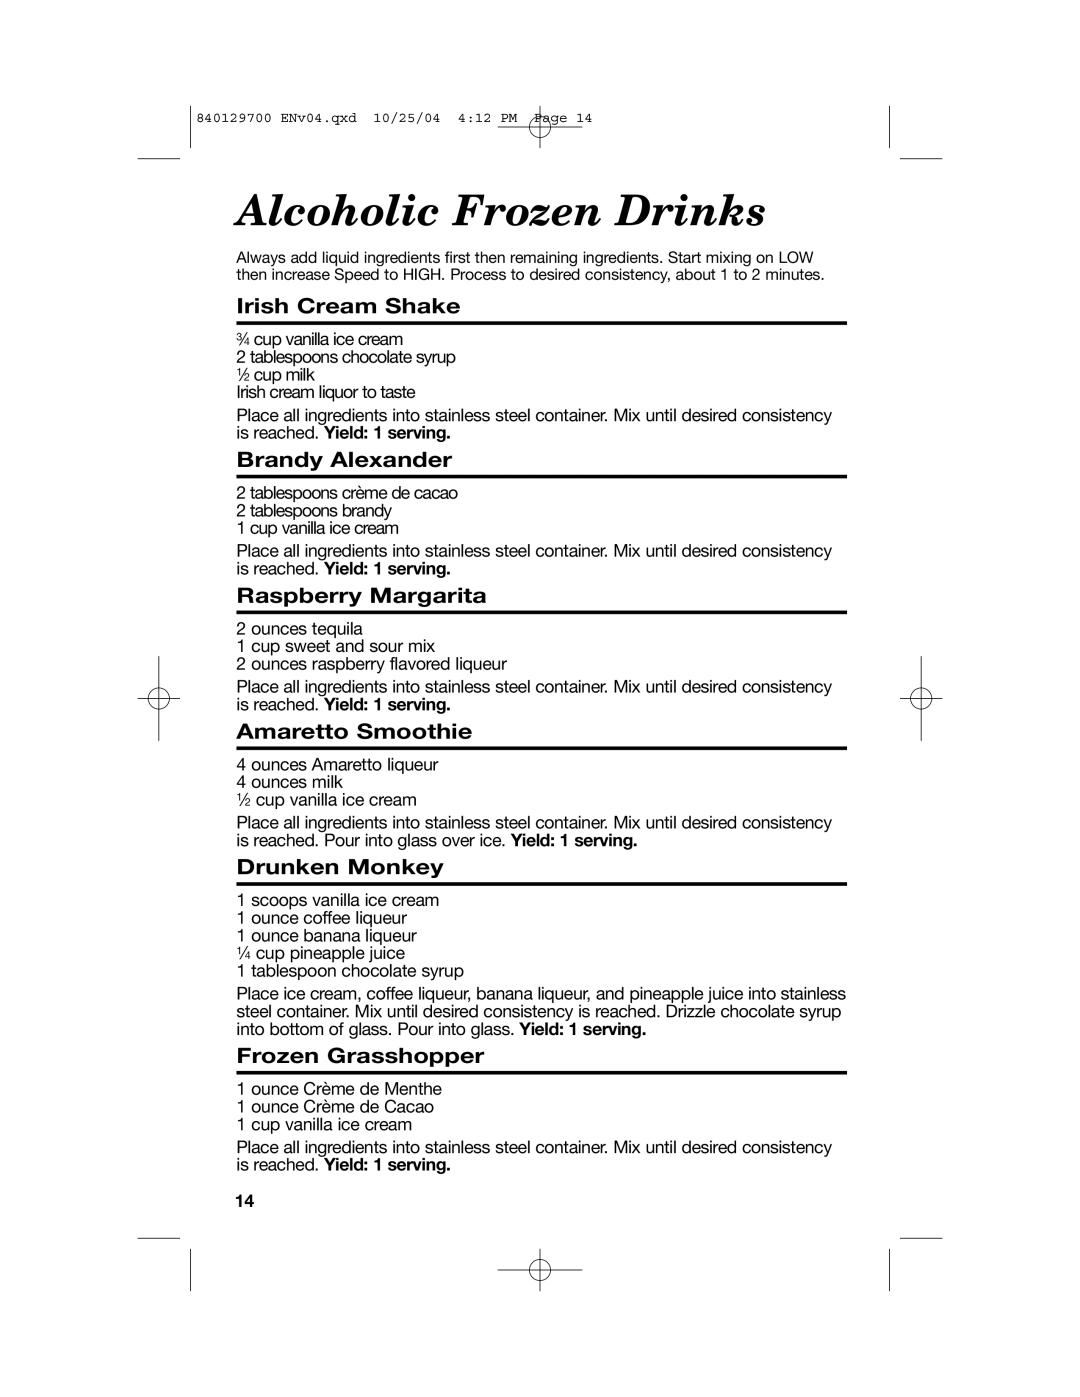 Hamilton Beach Drink Mixer manual Alcoholic Frozen Drinks, Irish Cream Shake, Brandy Alexander, Raspberry Margarita 